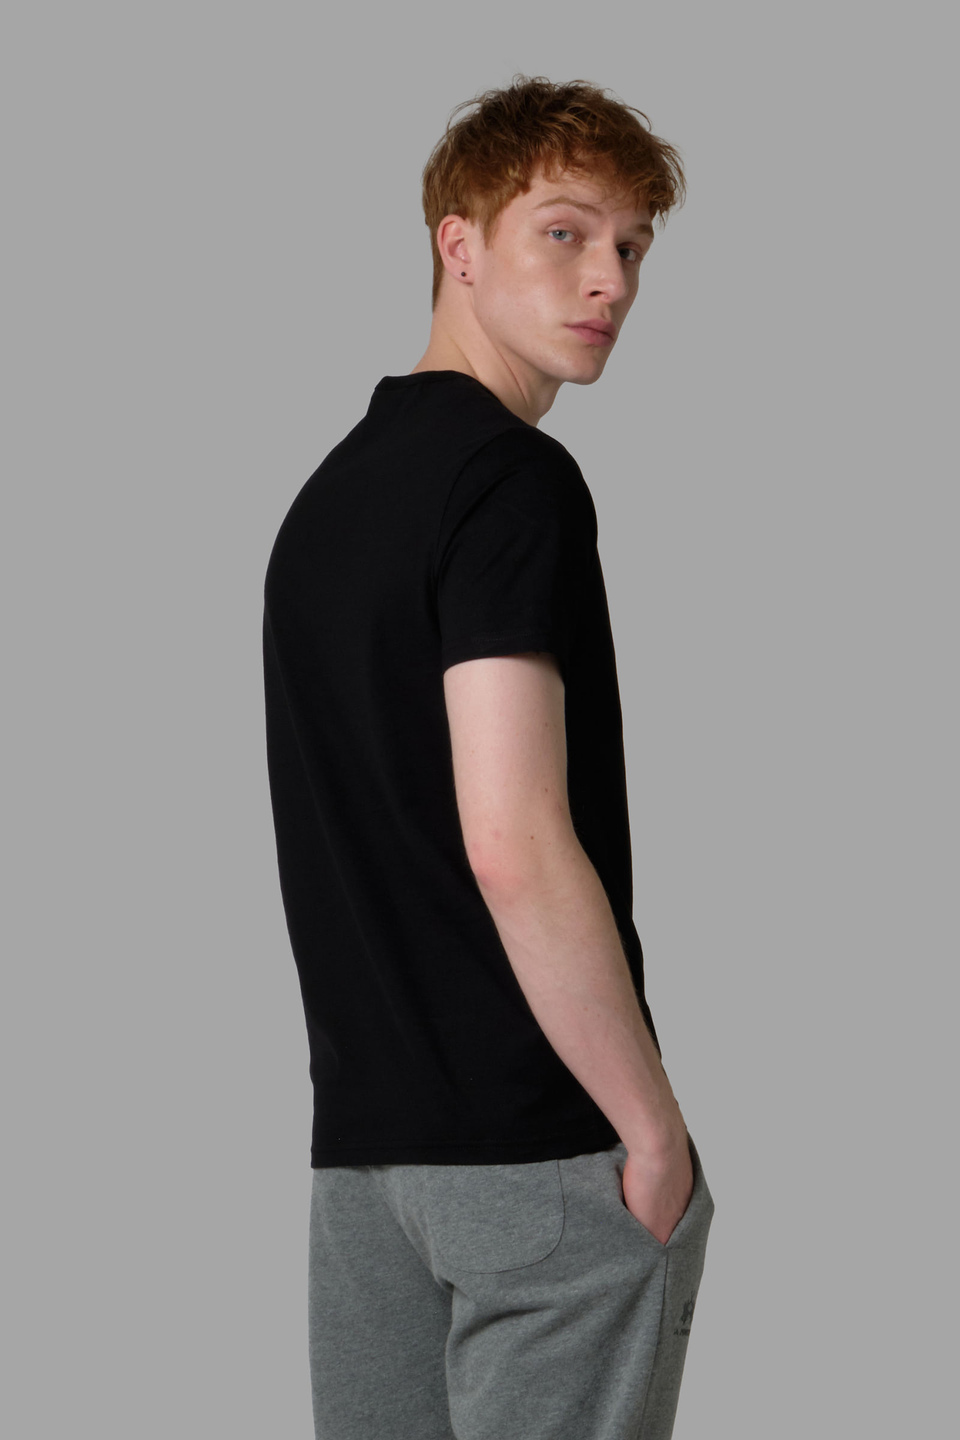 Regular Fit Herren T-Shirt - La Martina - Official Online Shop